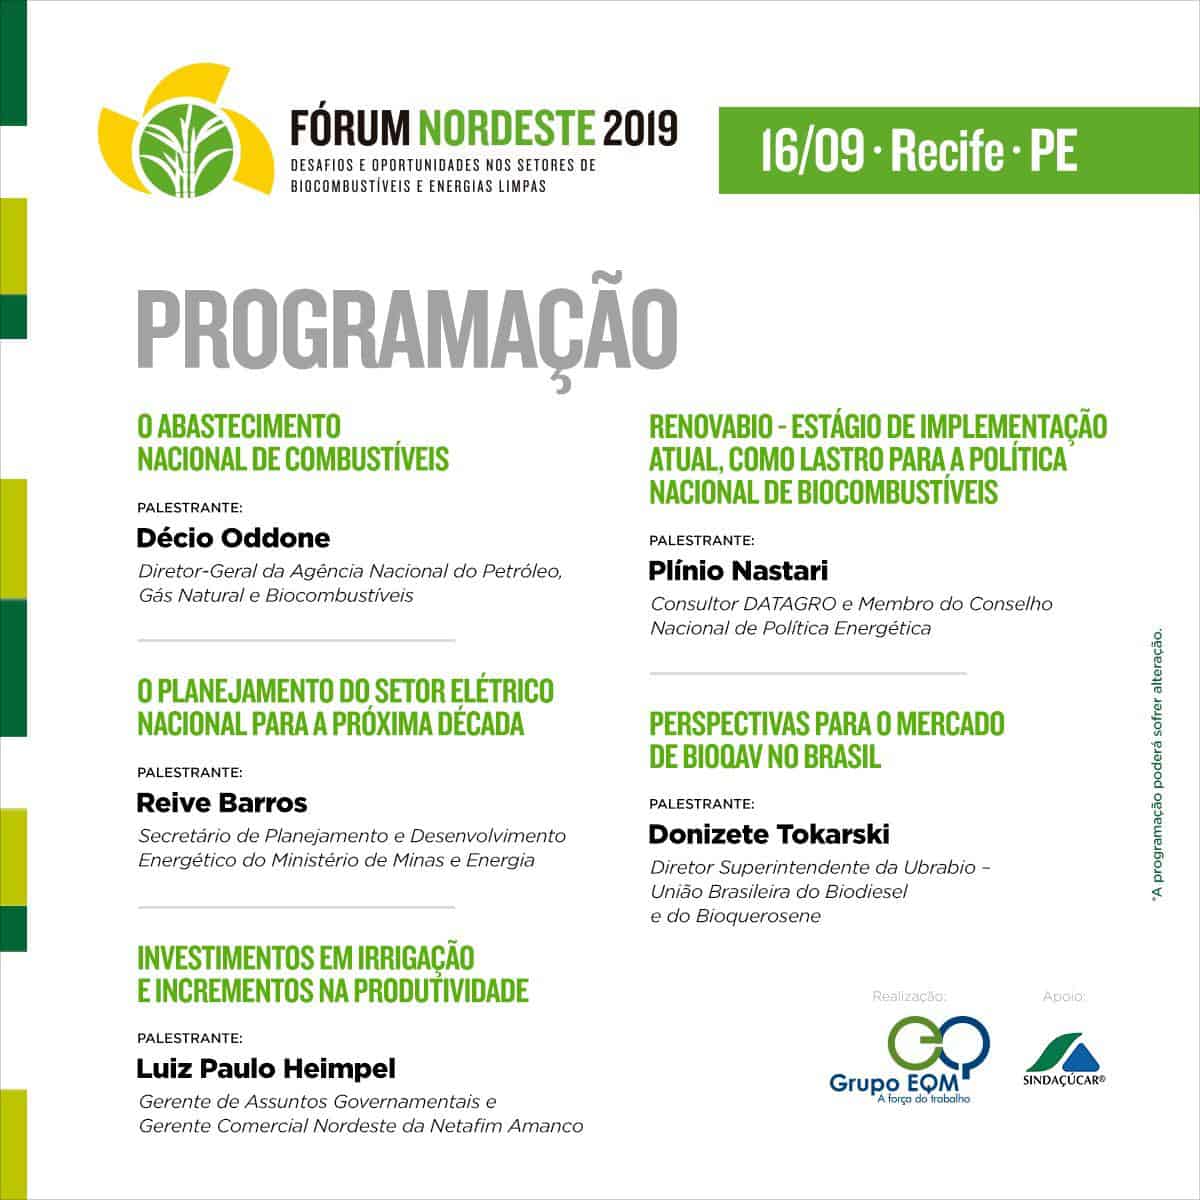 Fórum Nordeste 2019 @ Recife-PE